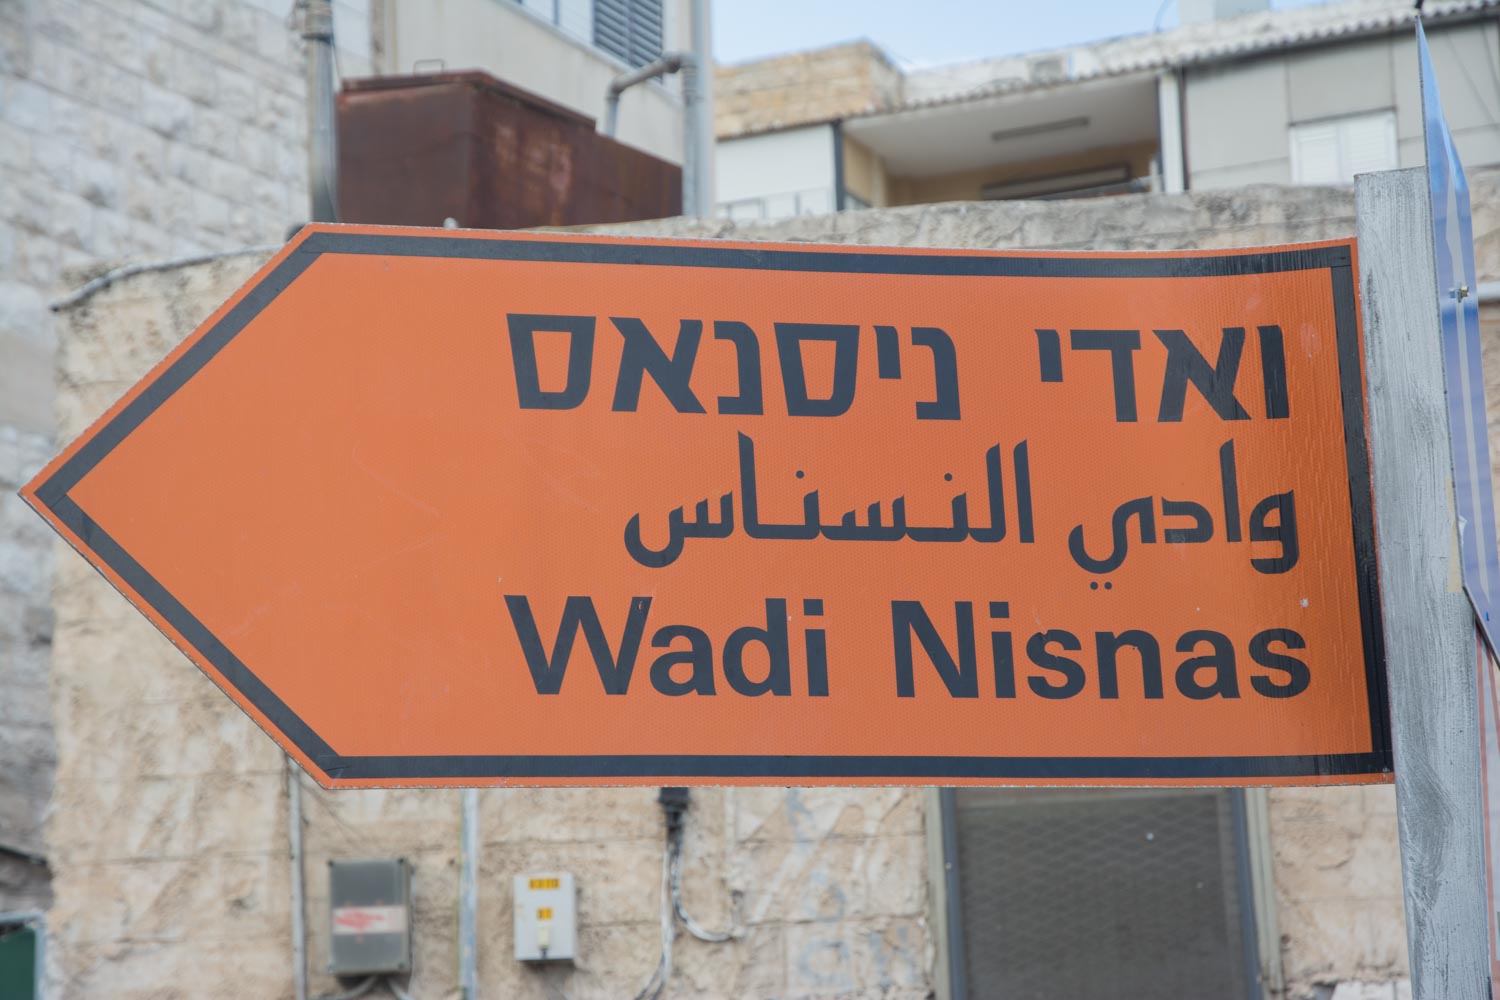 599. Wadi Nisnas